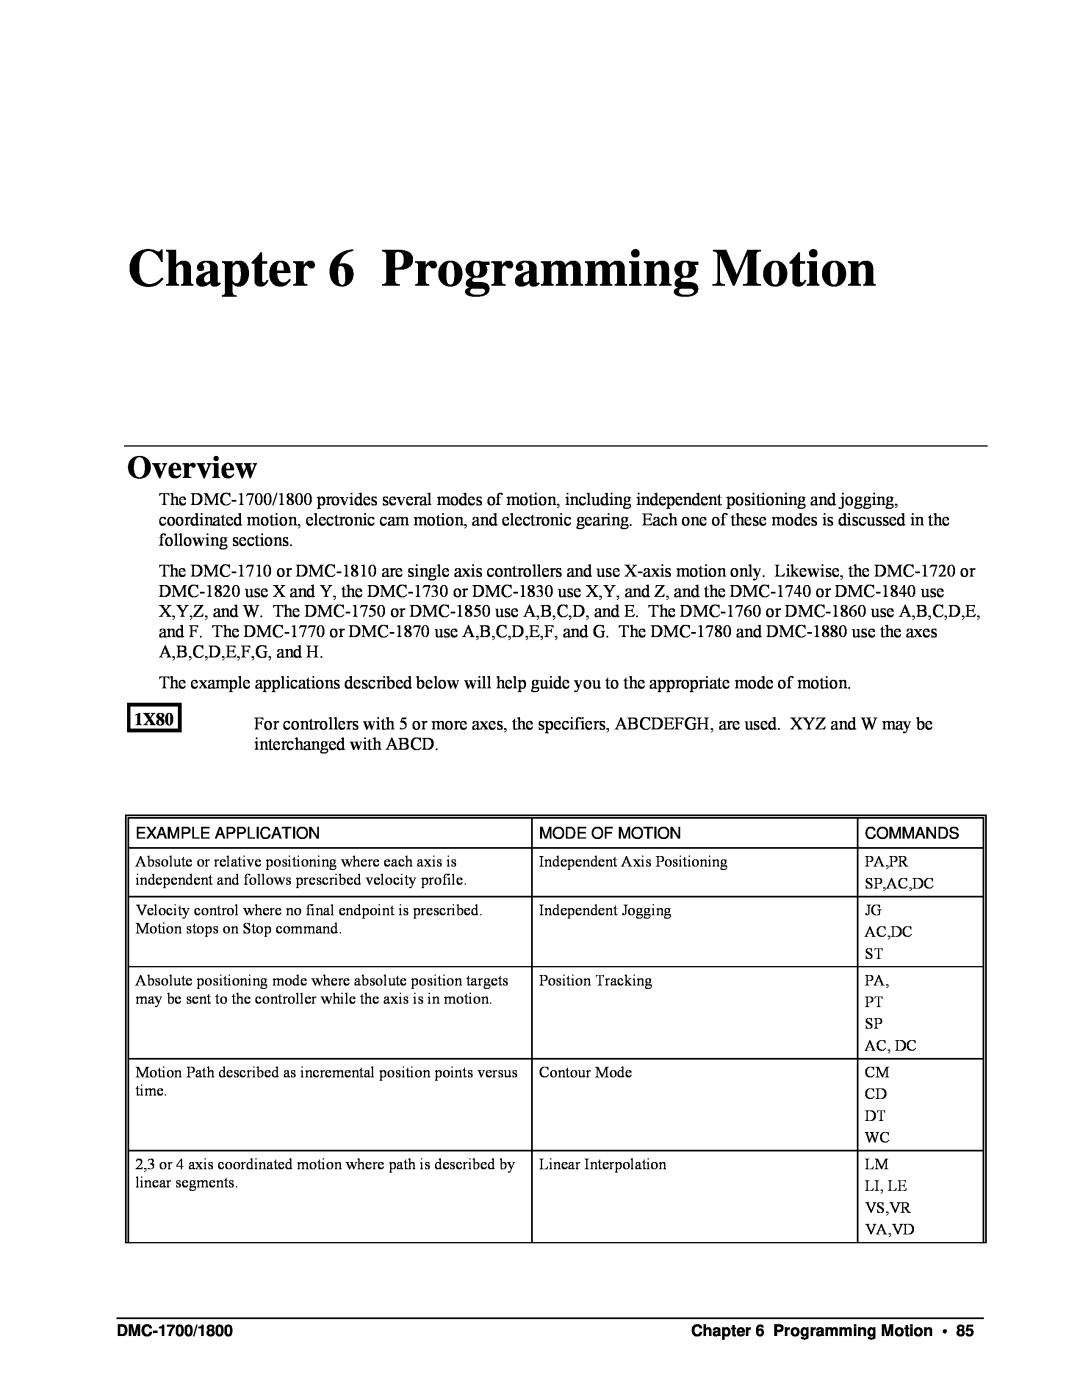 Galil DMC-1800 user manual 1X80, DMC-1700/1800, Programming Motion • 